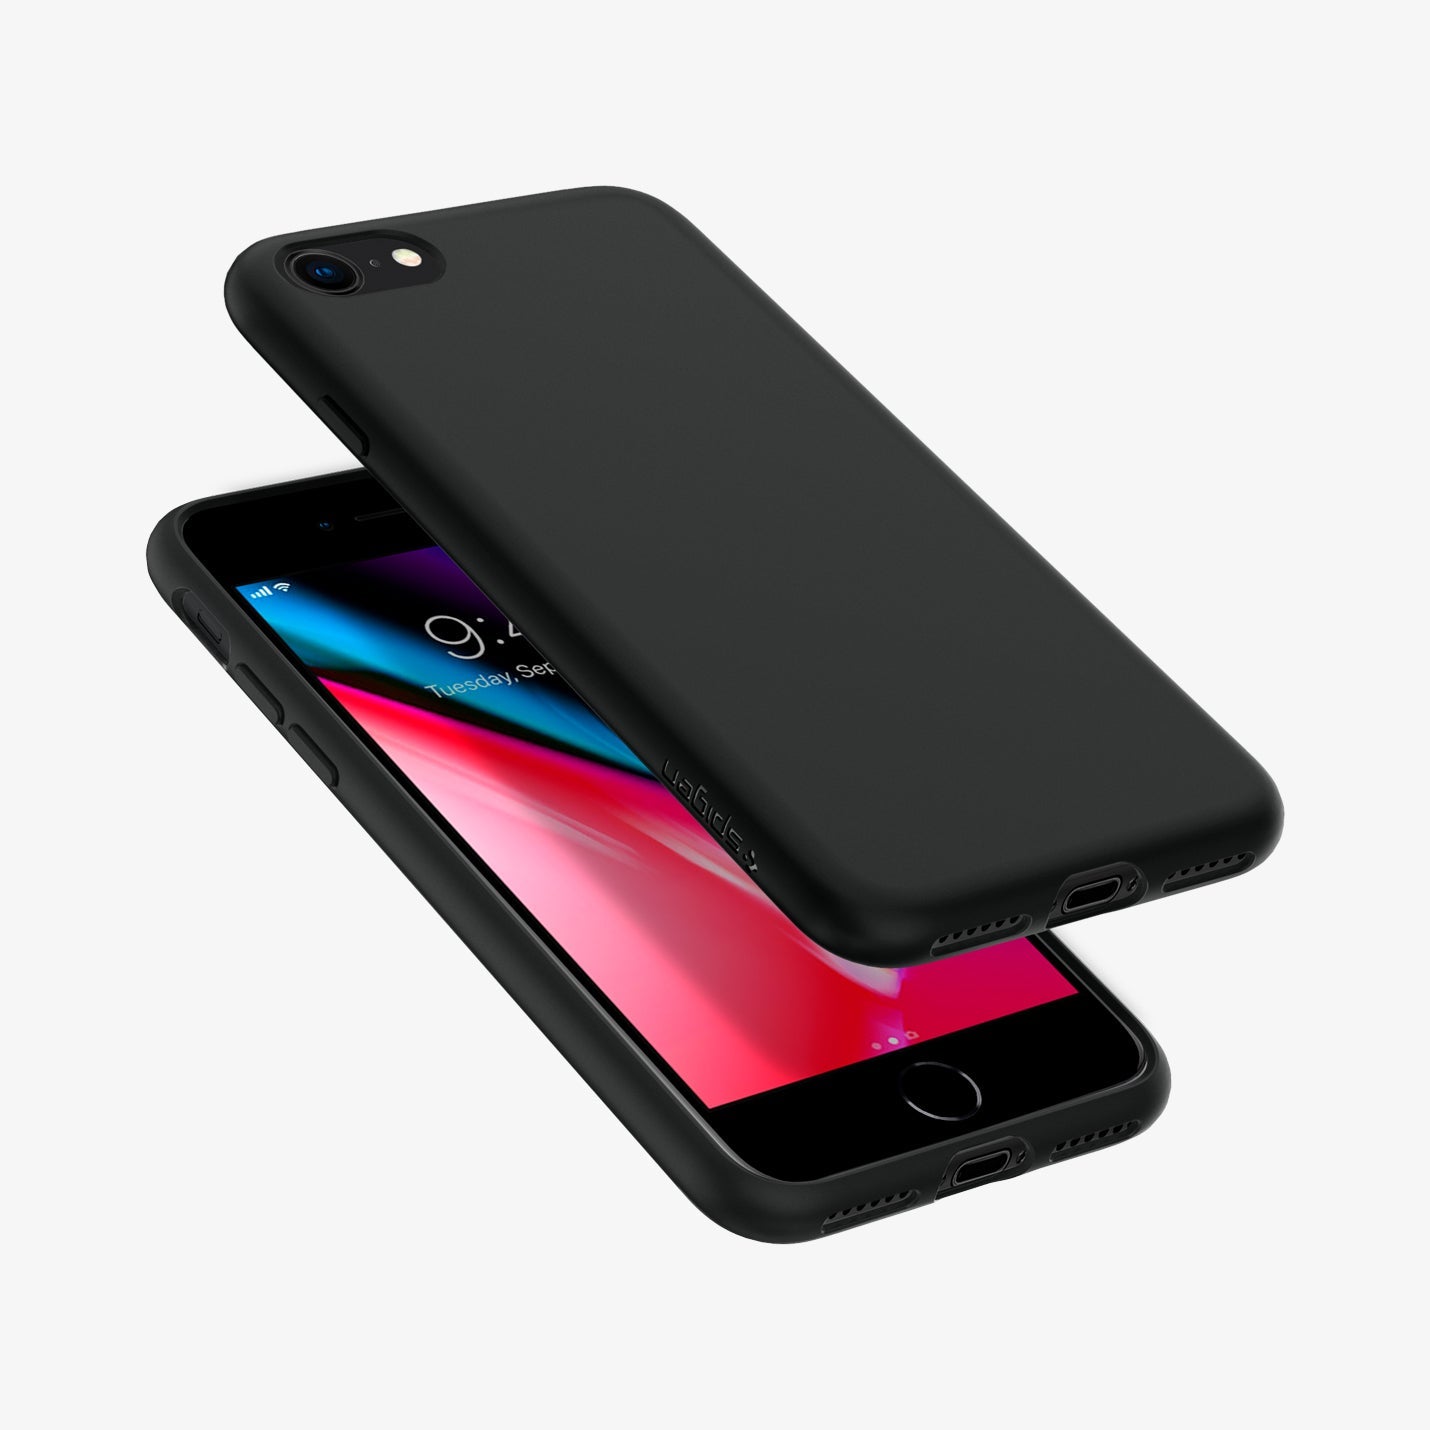 Spigen Liquid Crystal Back Cover Case Compatible with iPhone SE